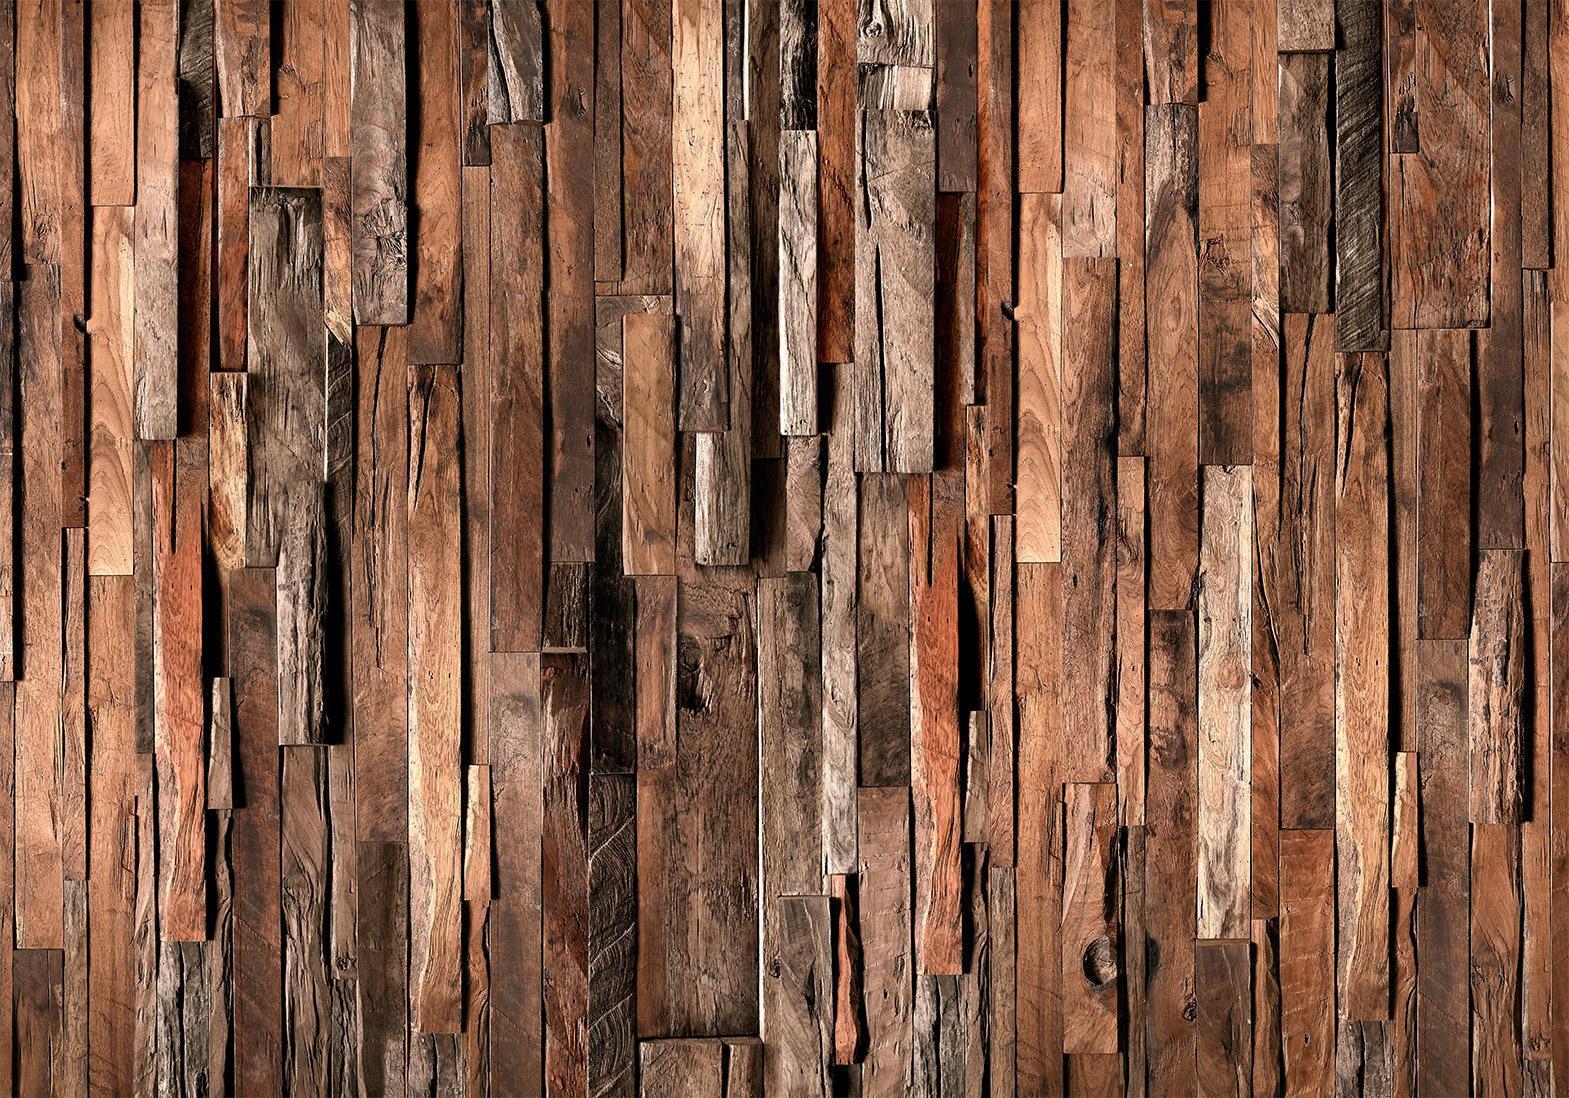 Papier peint - Wooden Curtain (Brown)